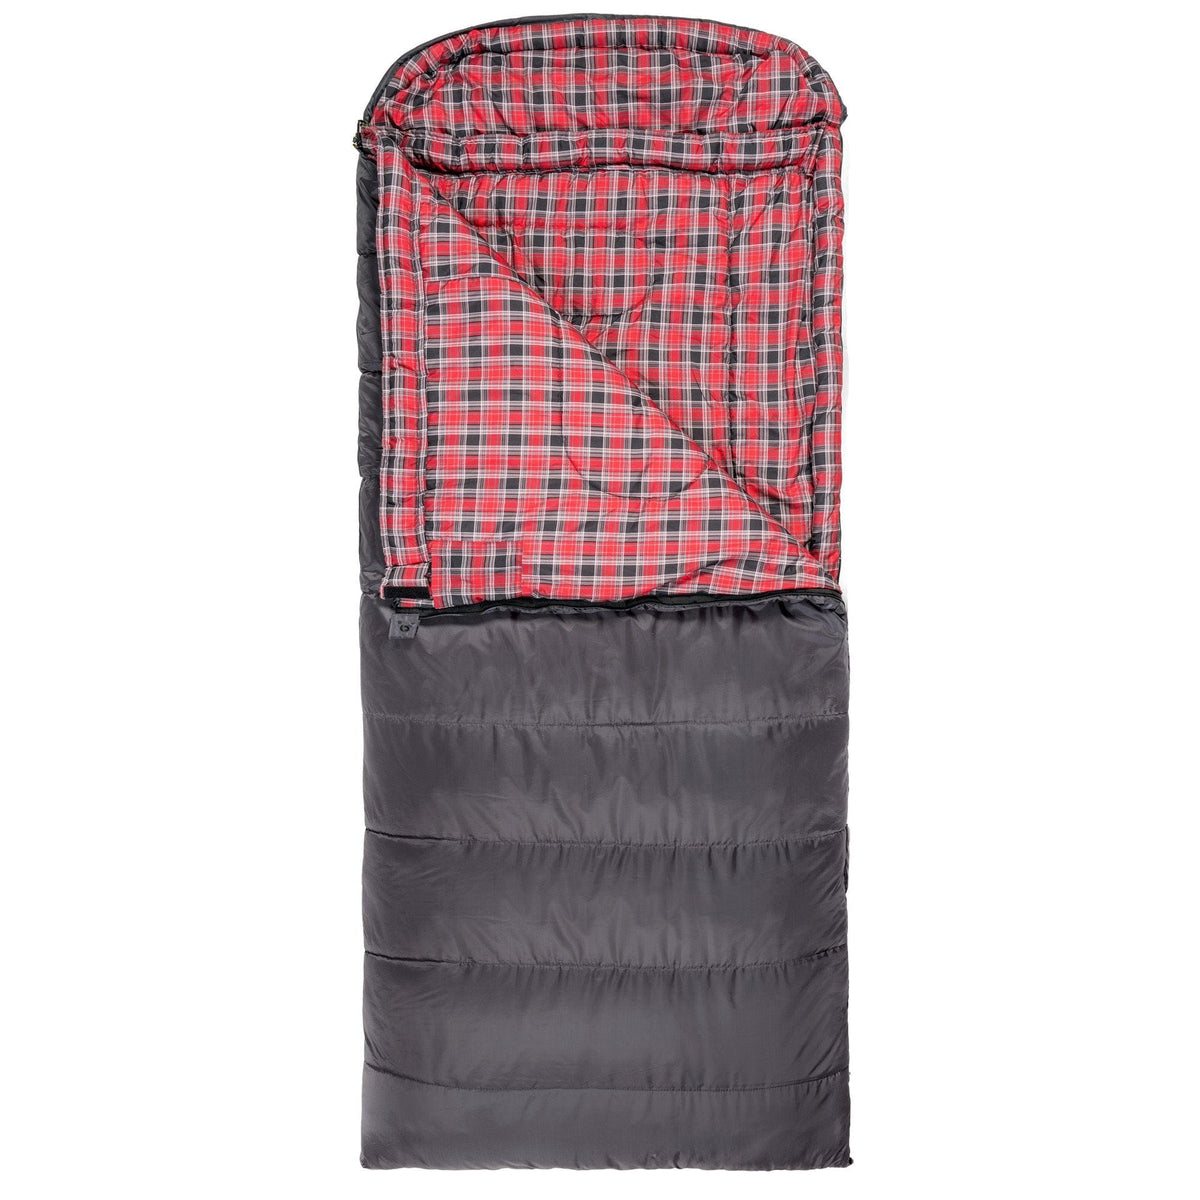 TETON Sports Celsius XL -25˚F Sleeping Bag Left Zipper / Grey 139L